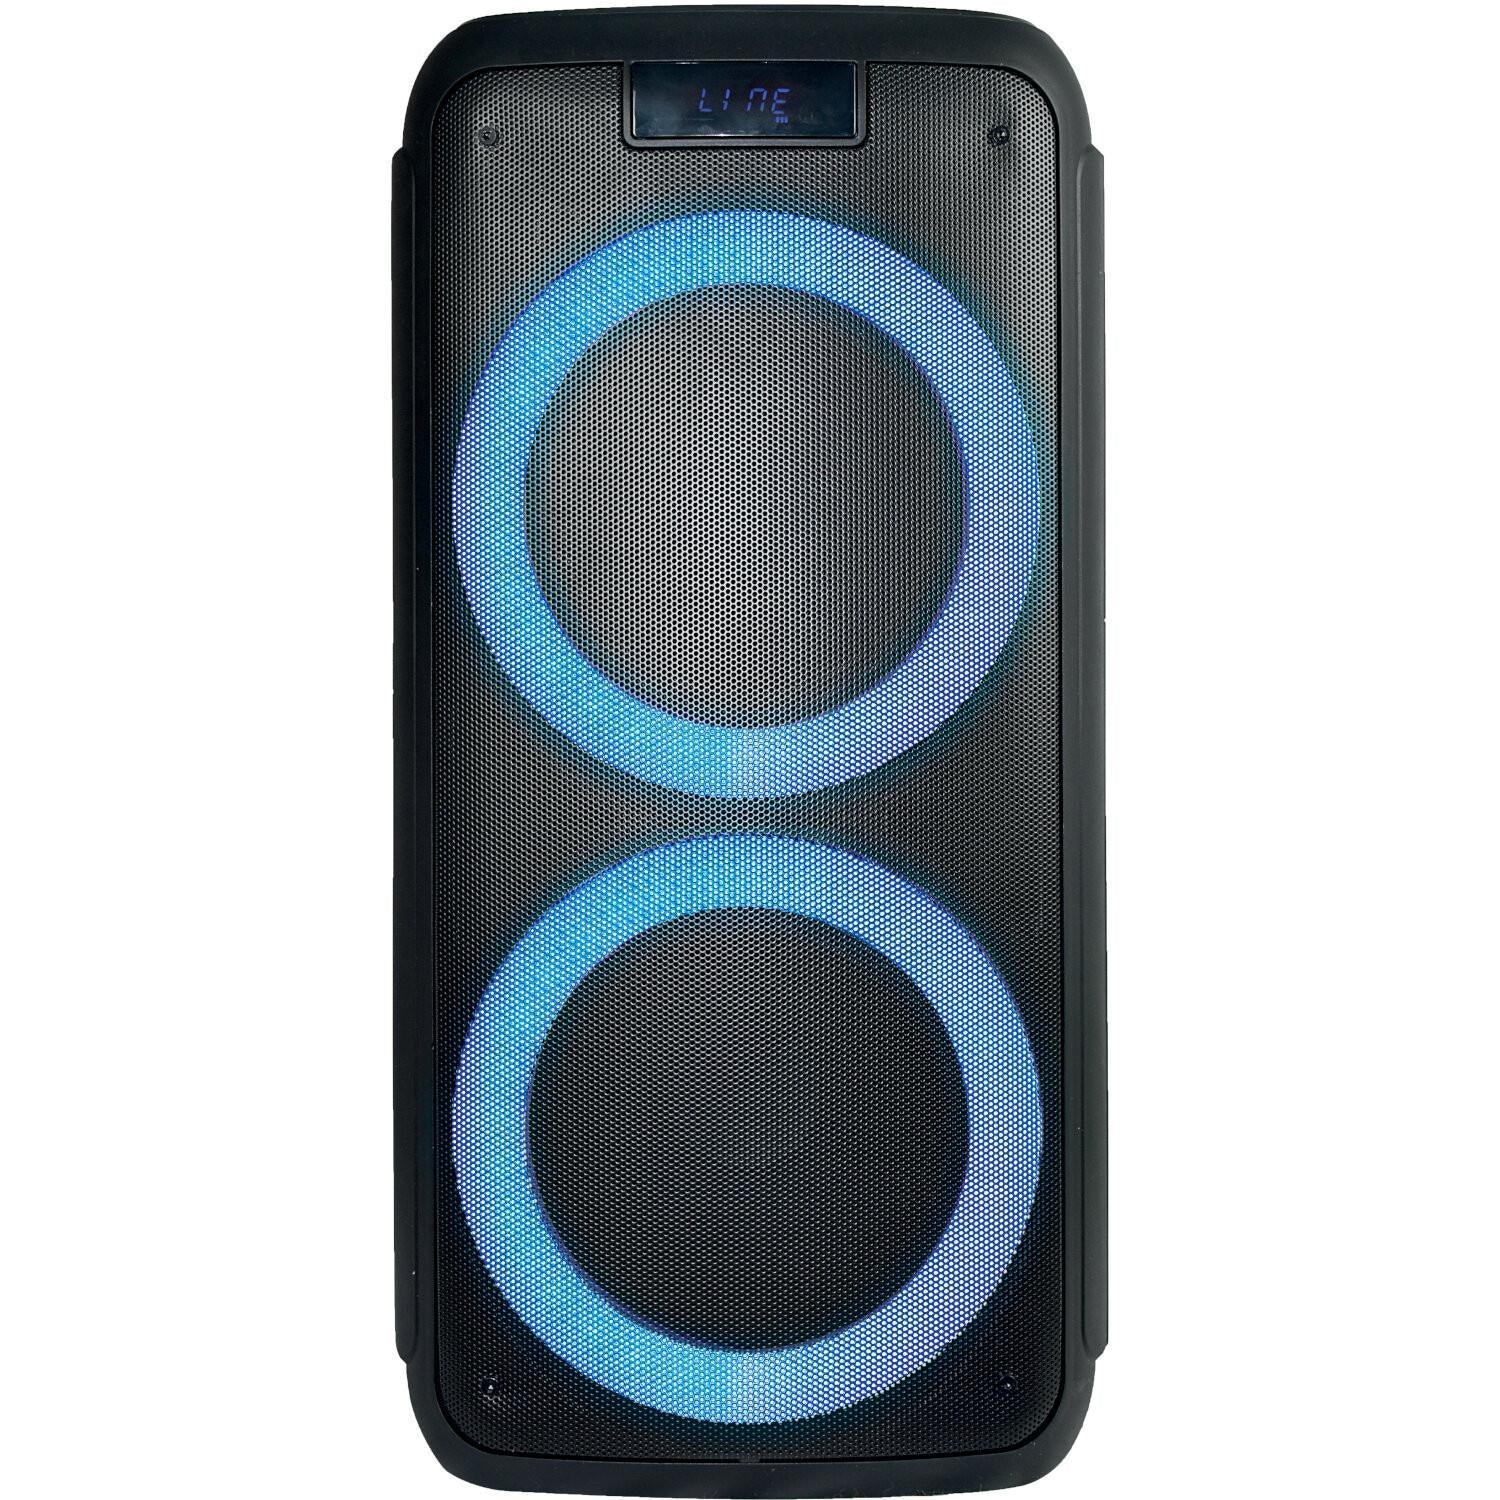 Ibiza FREESOUND400 400w Bluetooth, USB, Remote Soundbox - DY Pro Audio